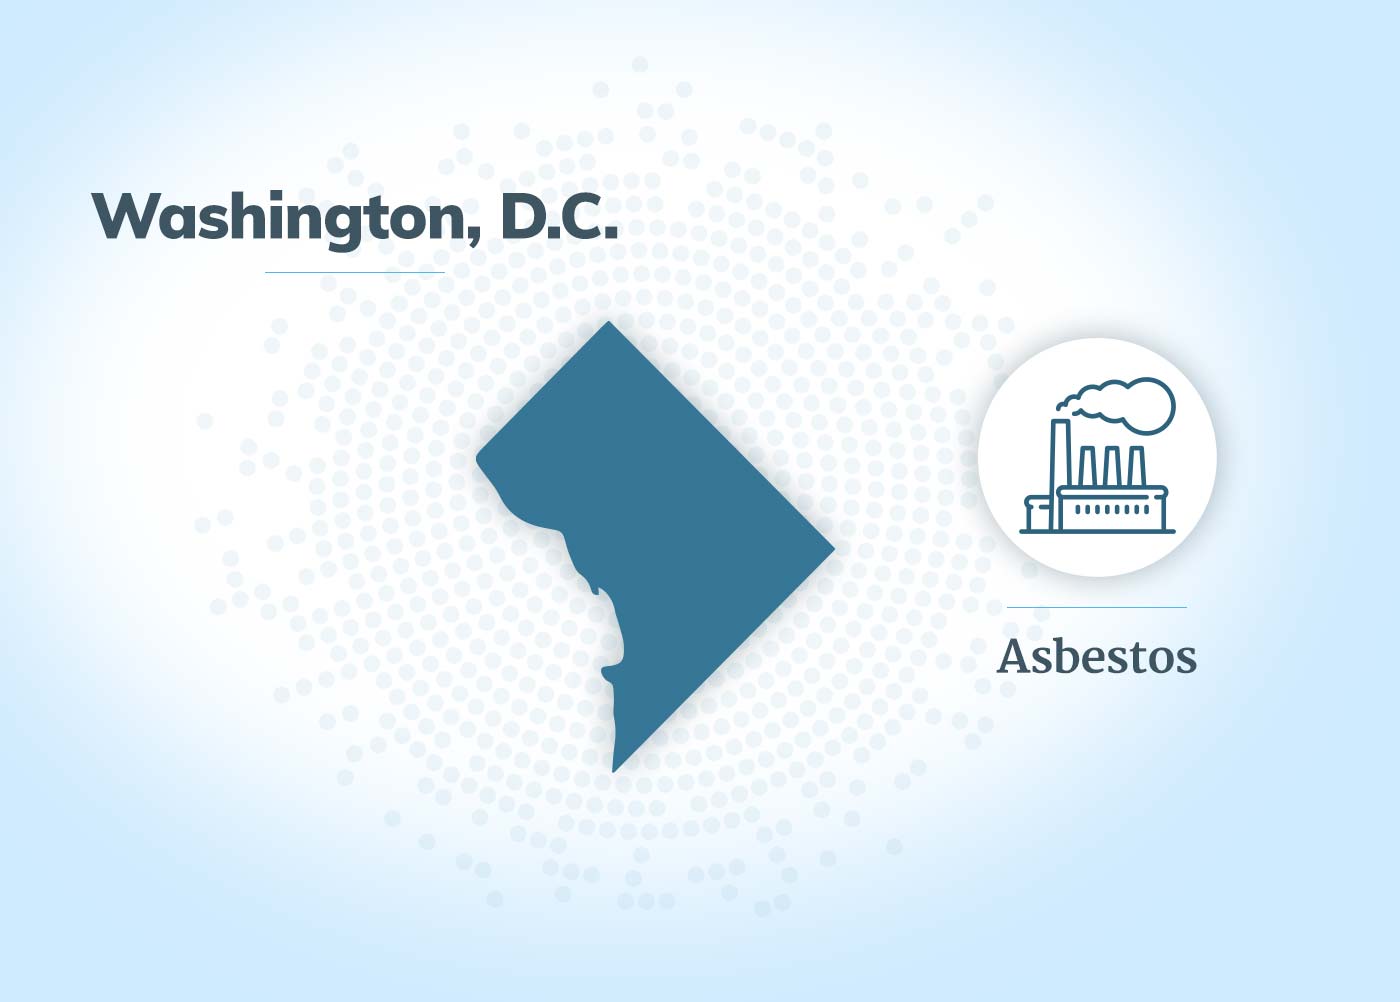 Asbestos exposure in Washington, D.C.